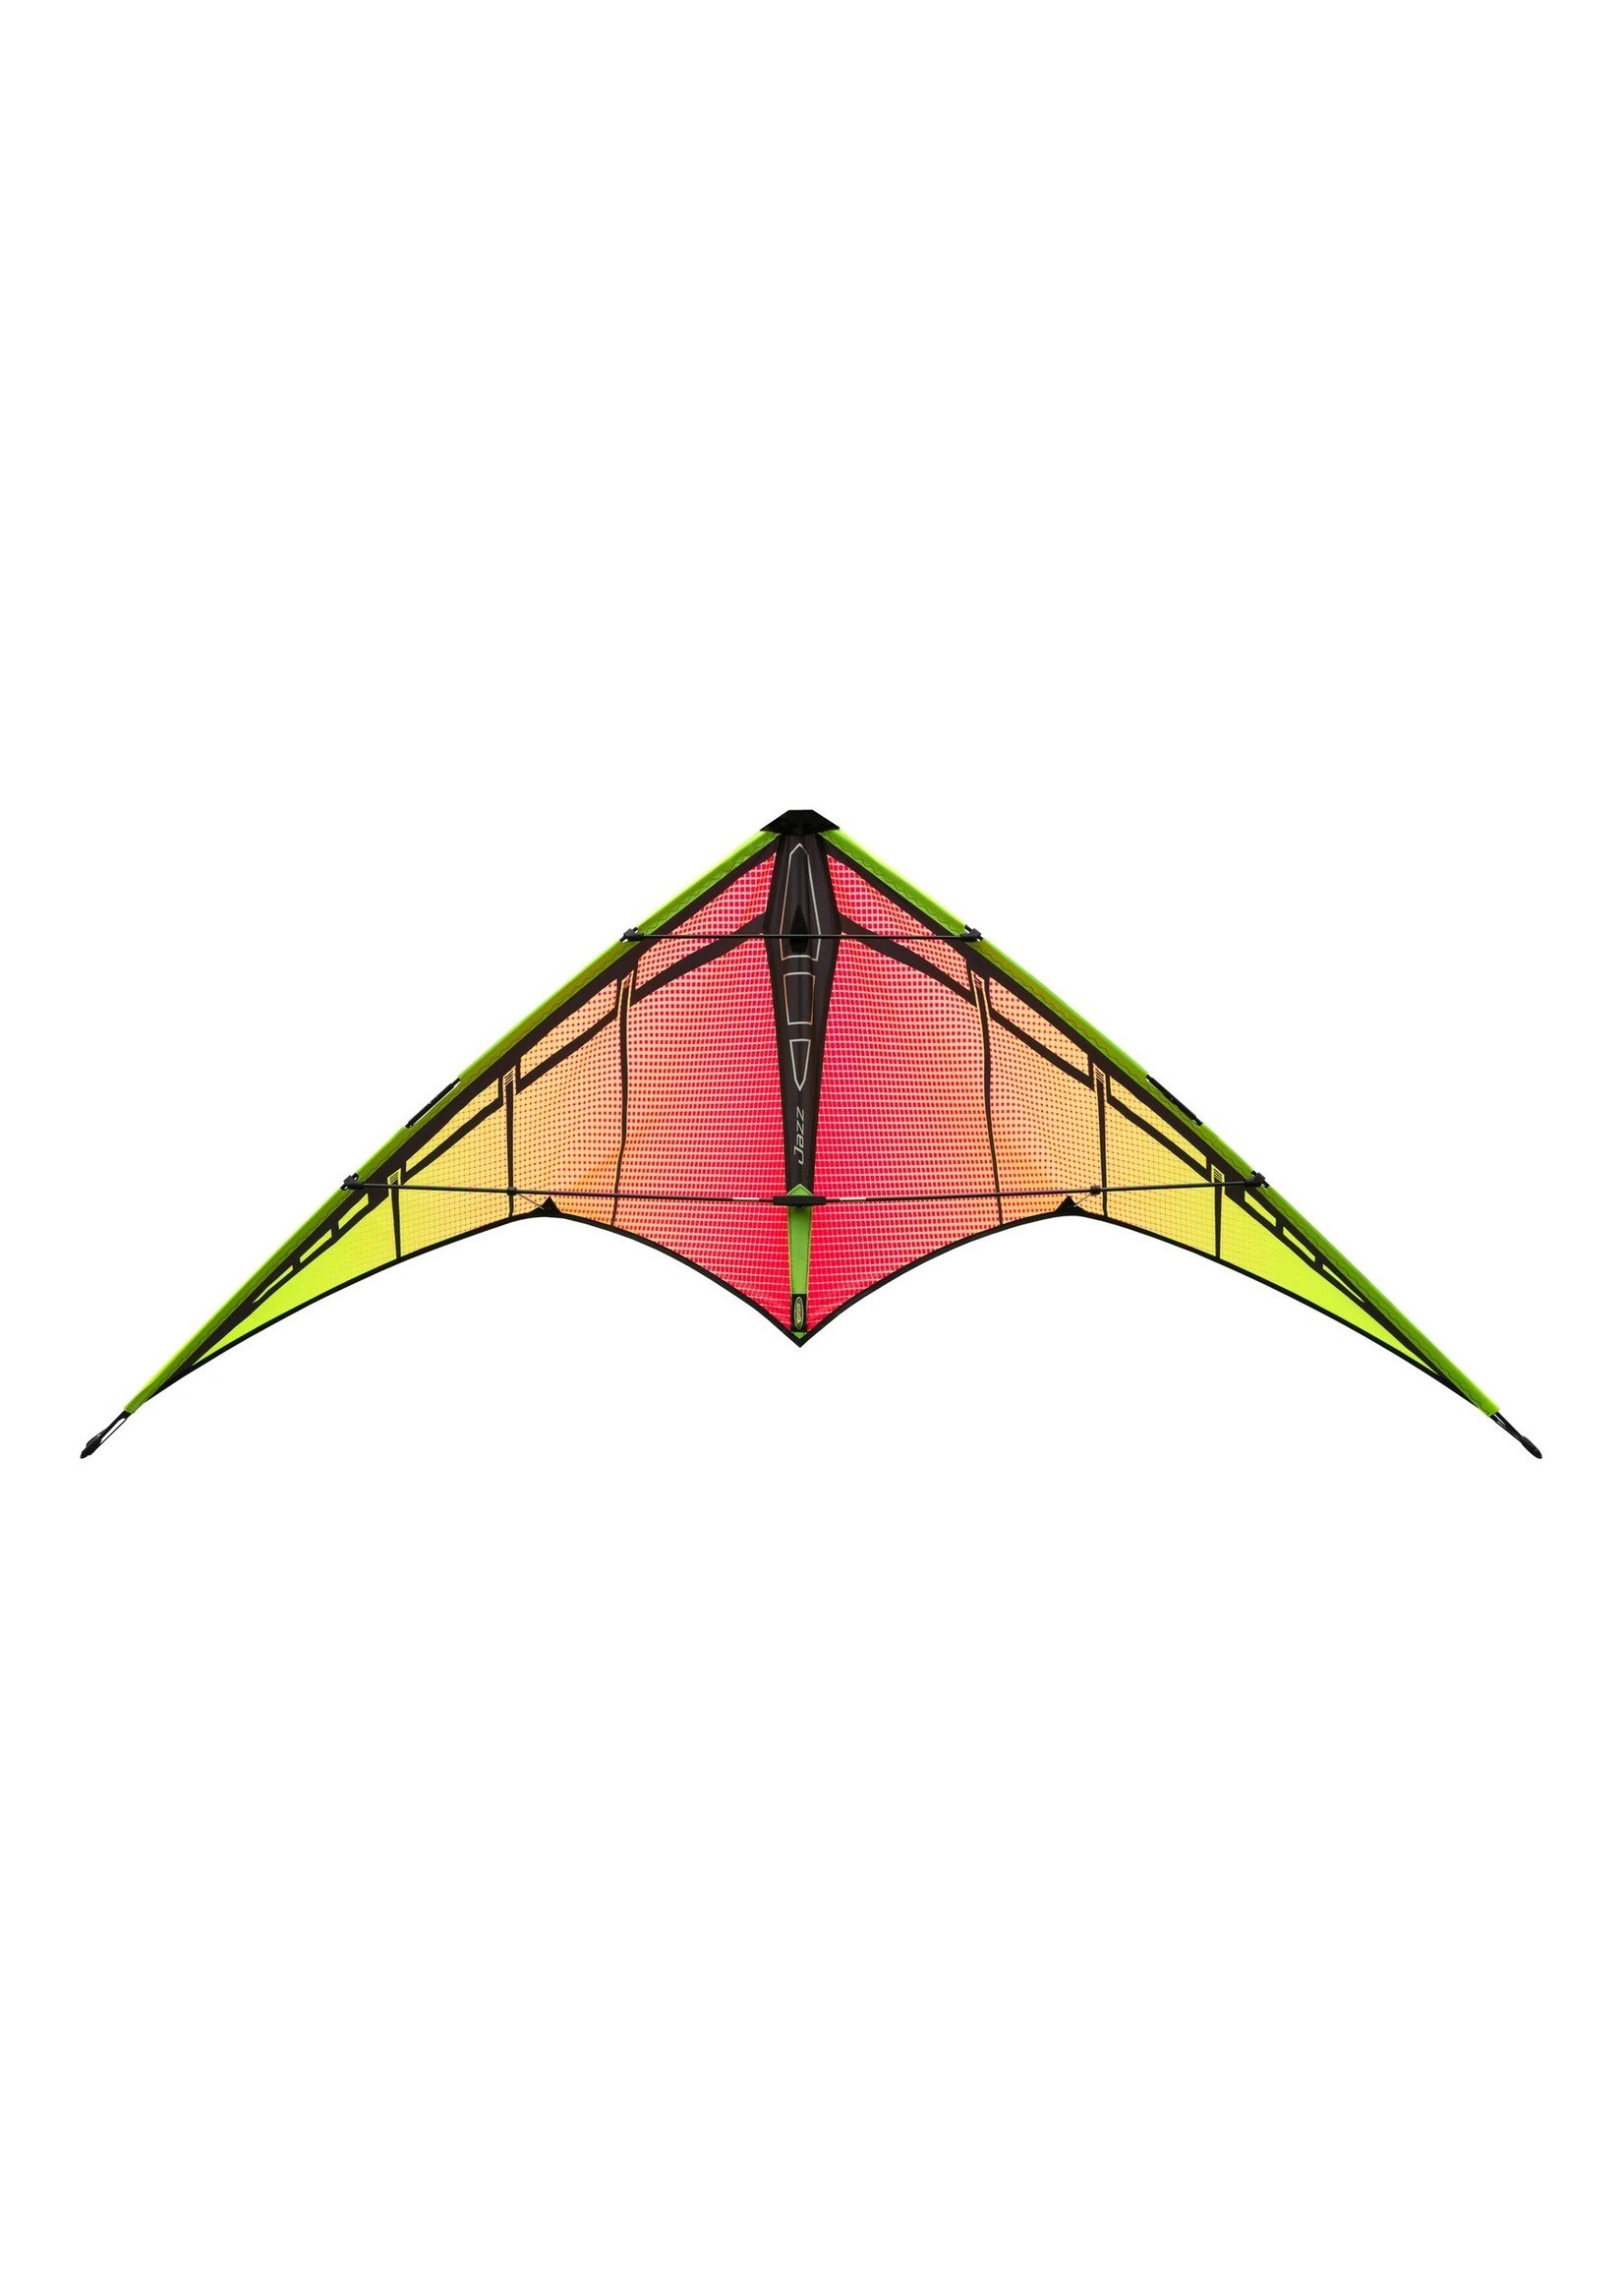 Prism Jazz 2.0 Infrared - Dual Line Kite